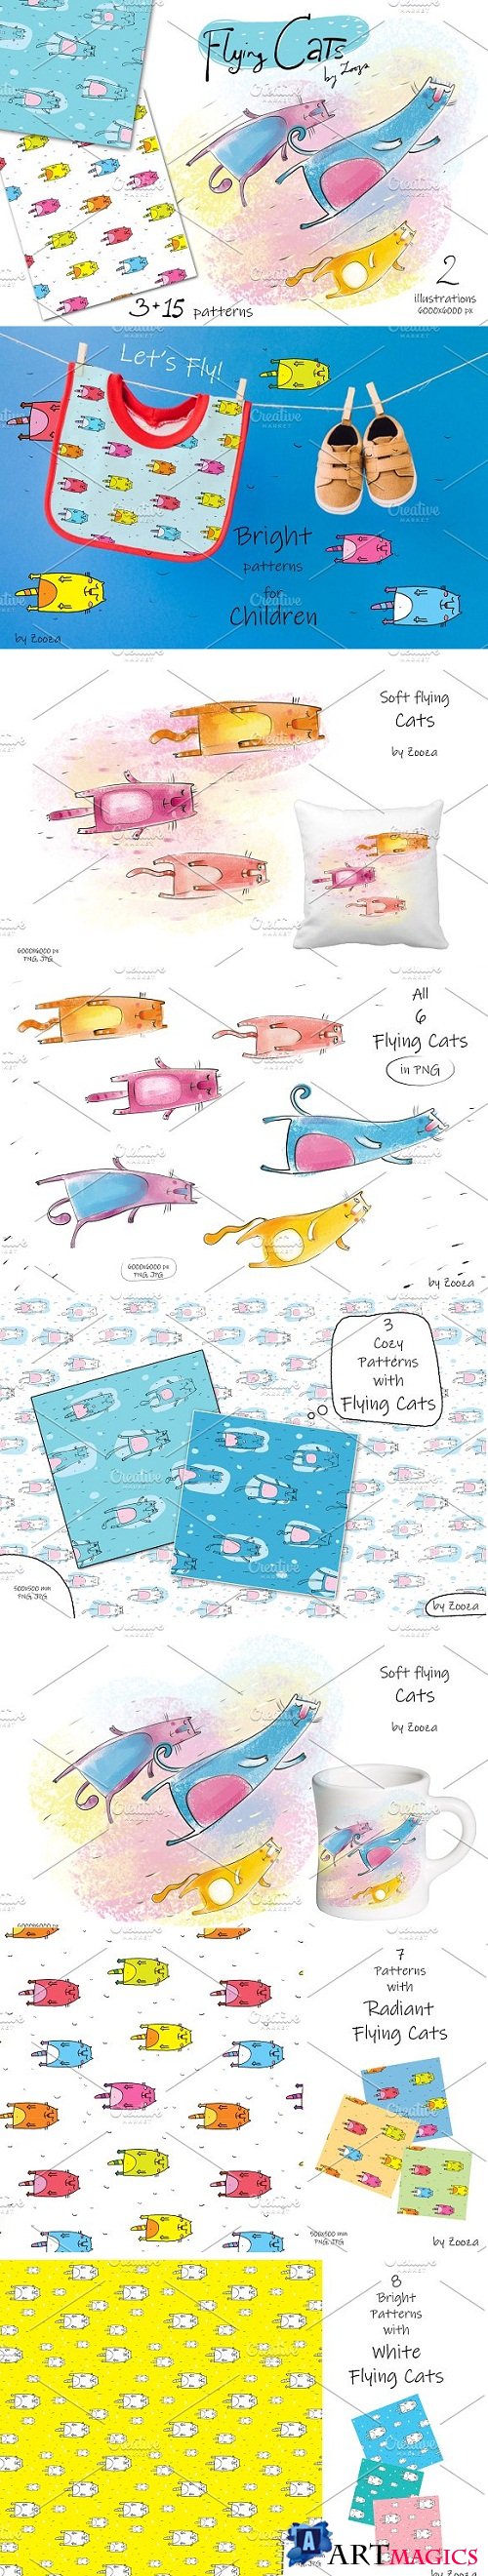 Flying Cats- patterns, illustrations - 3409058